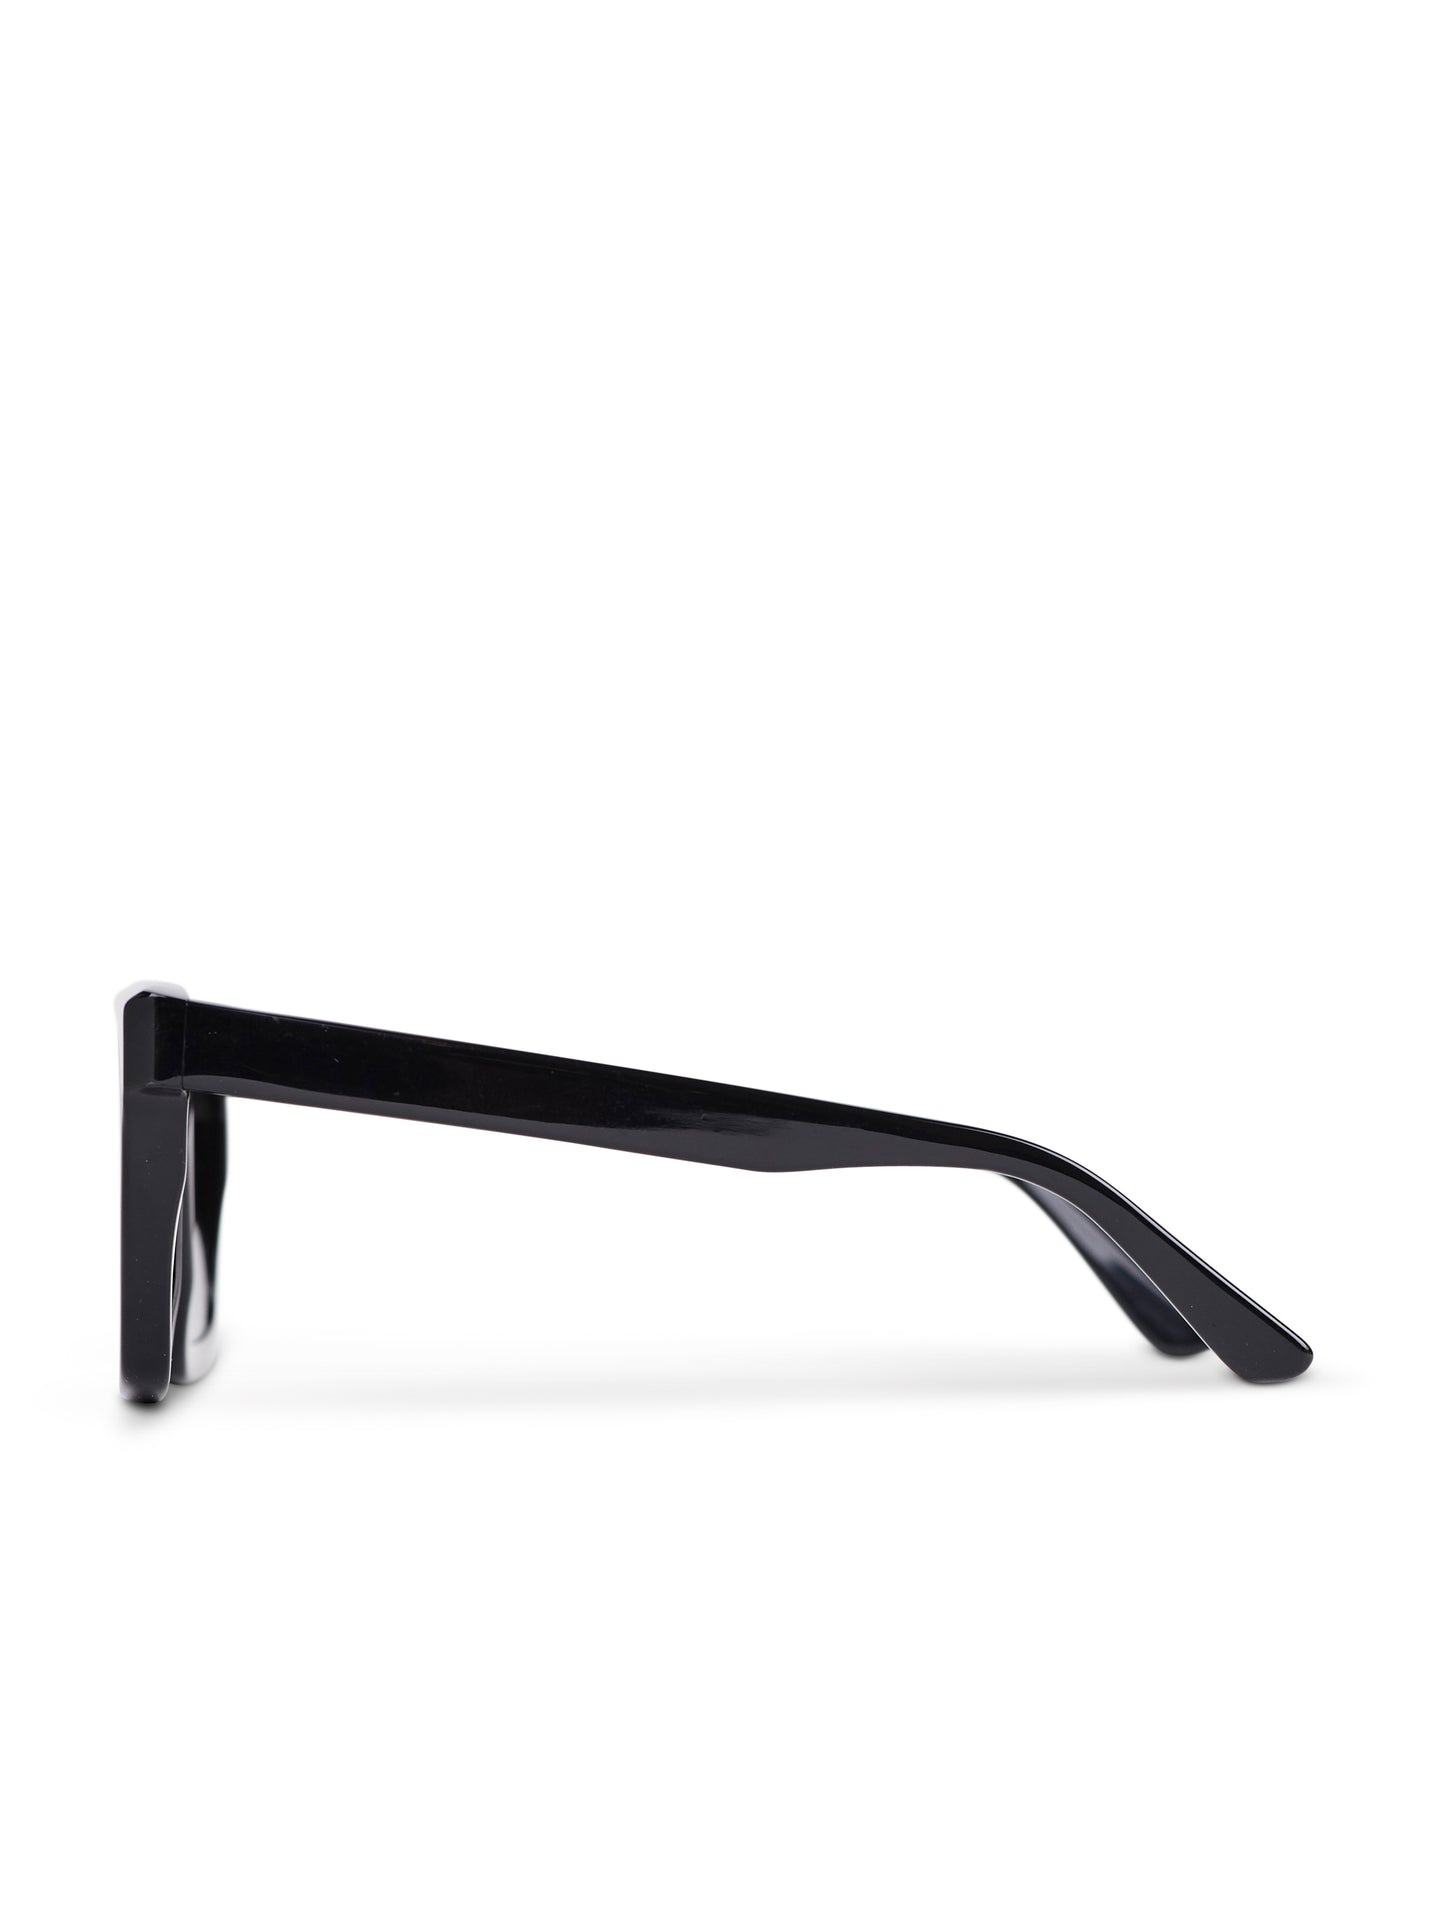 Dexter Sunglasses - Handmade (Black)